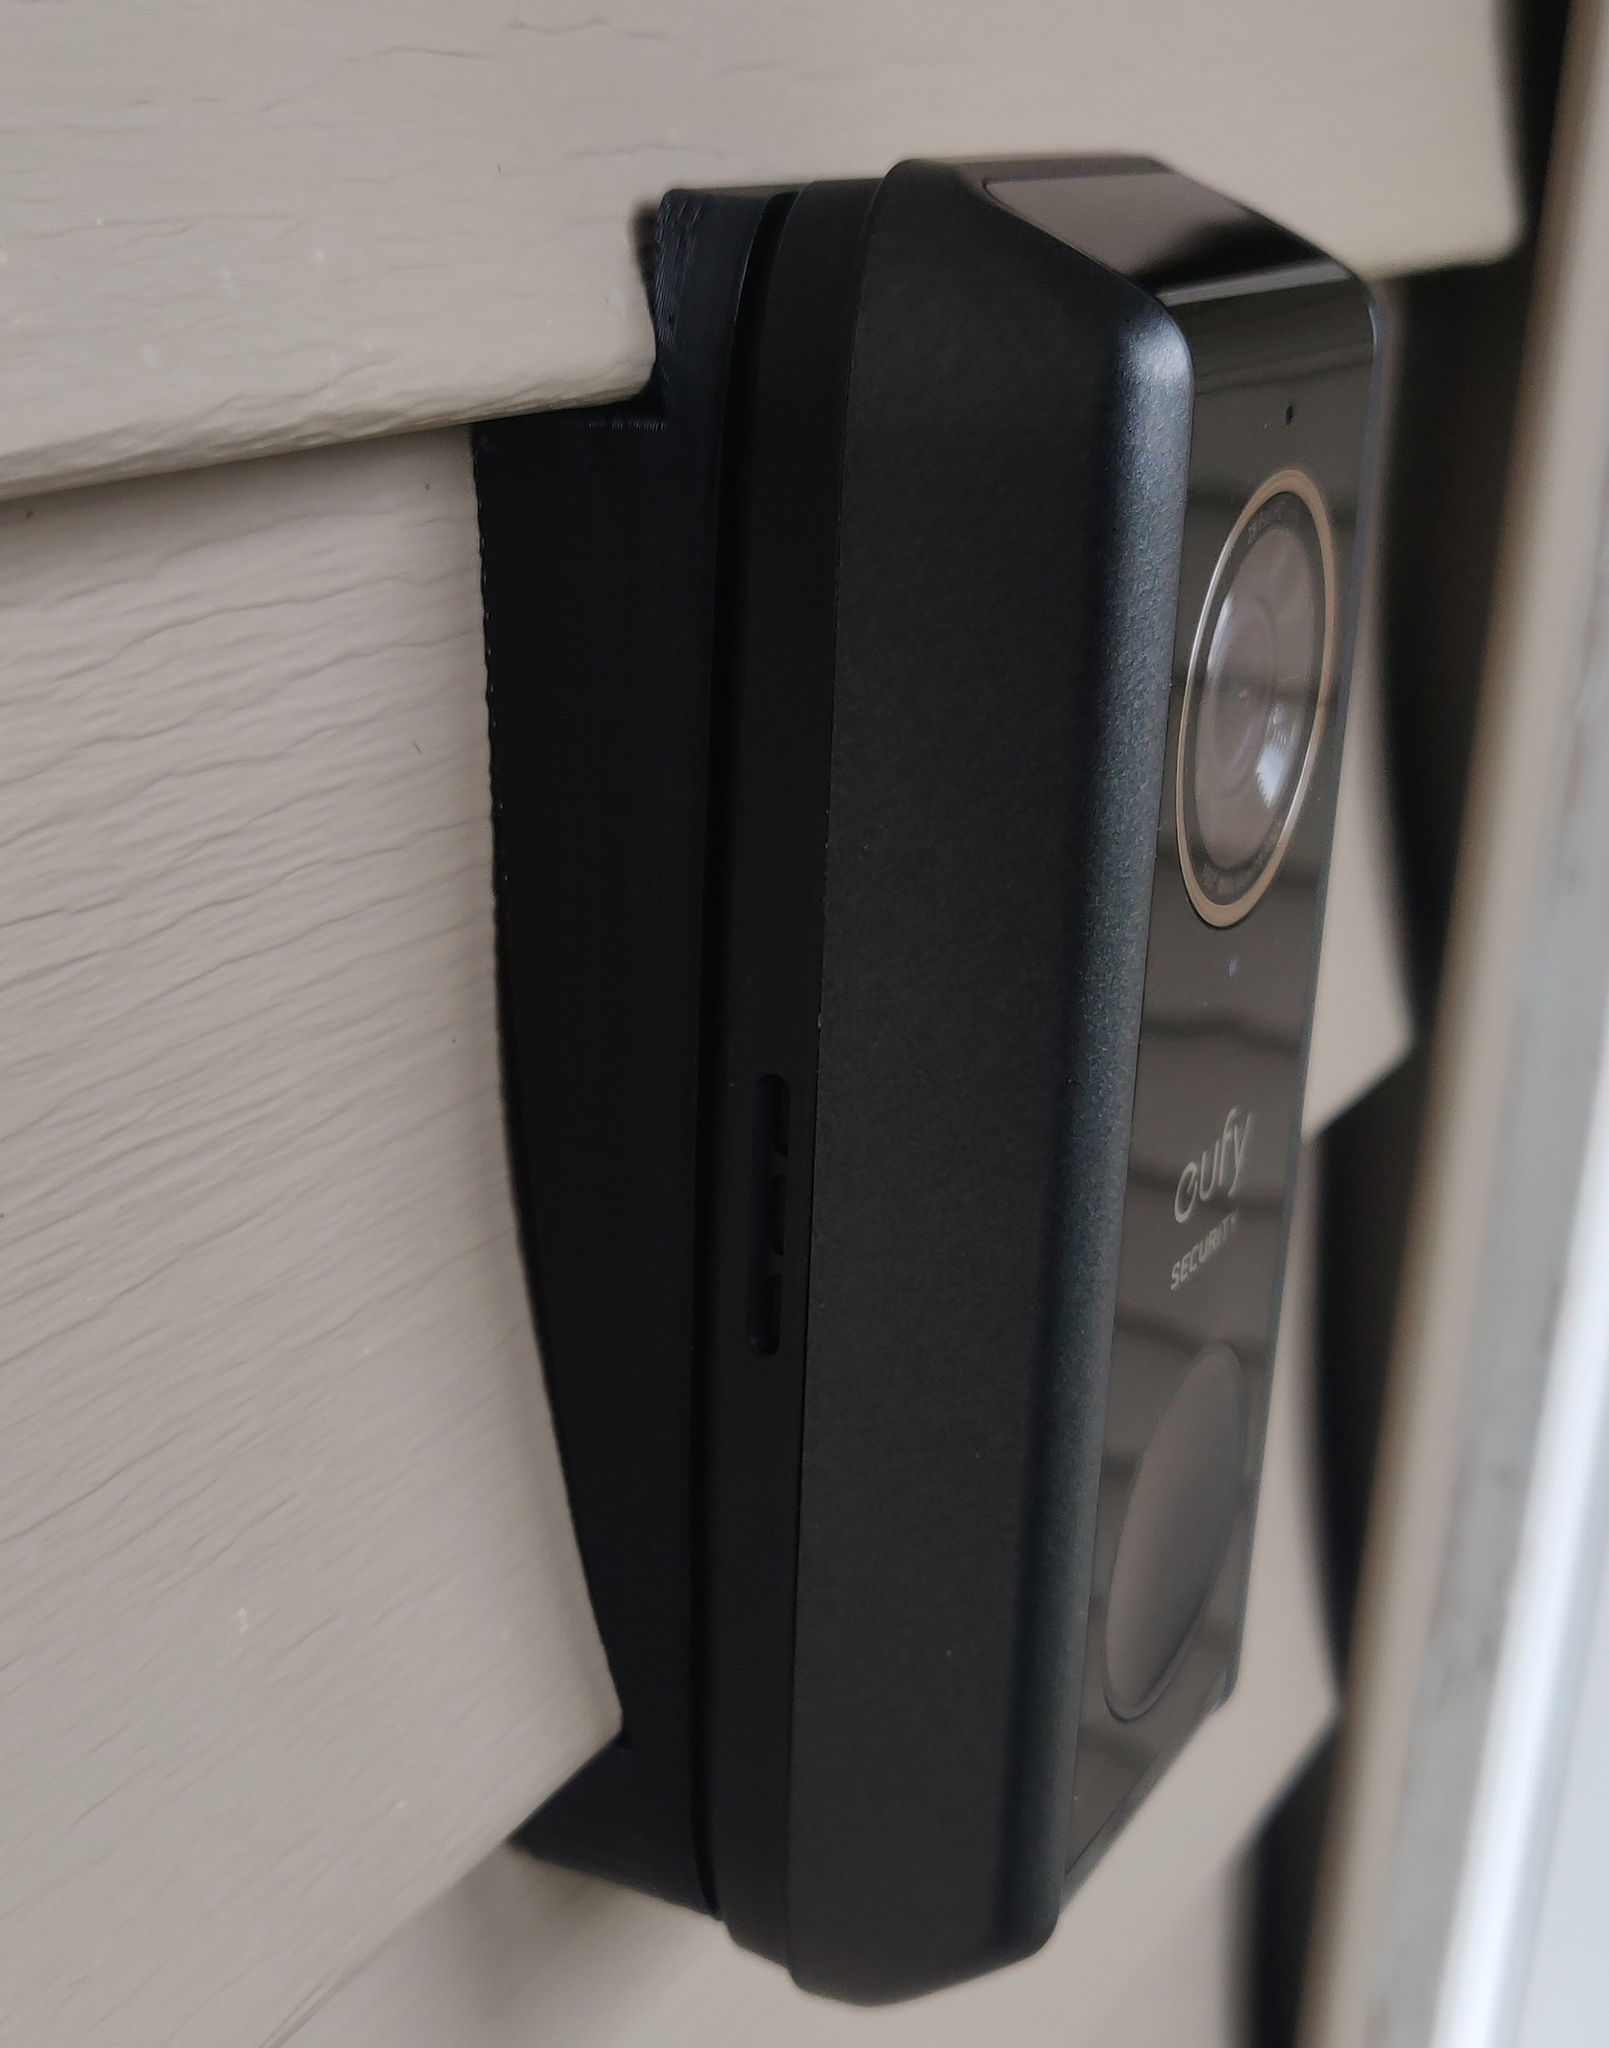  eufy Security Video Doorbell S330 (Battery-Powered